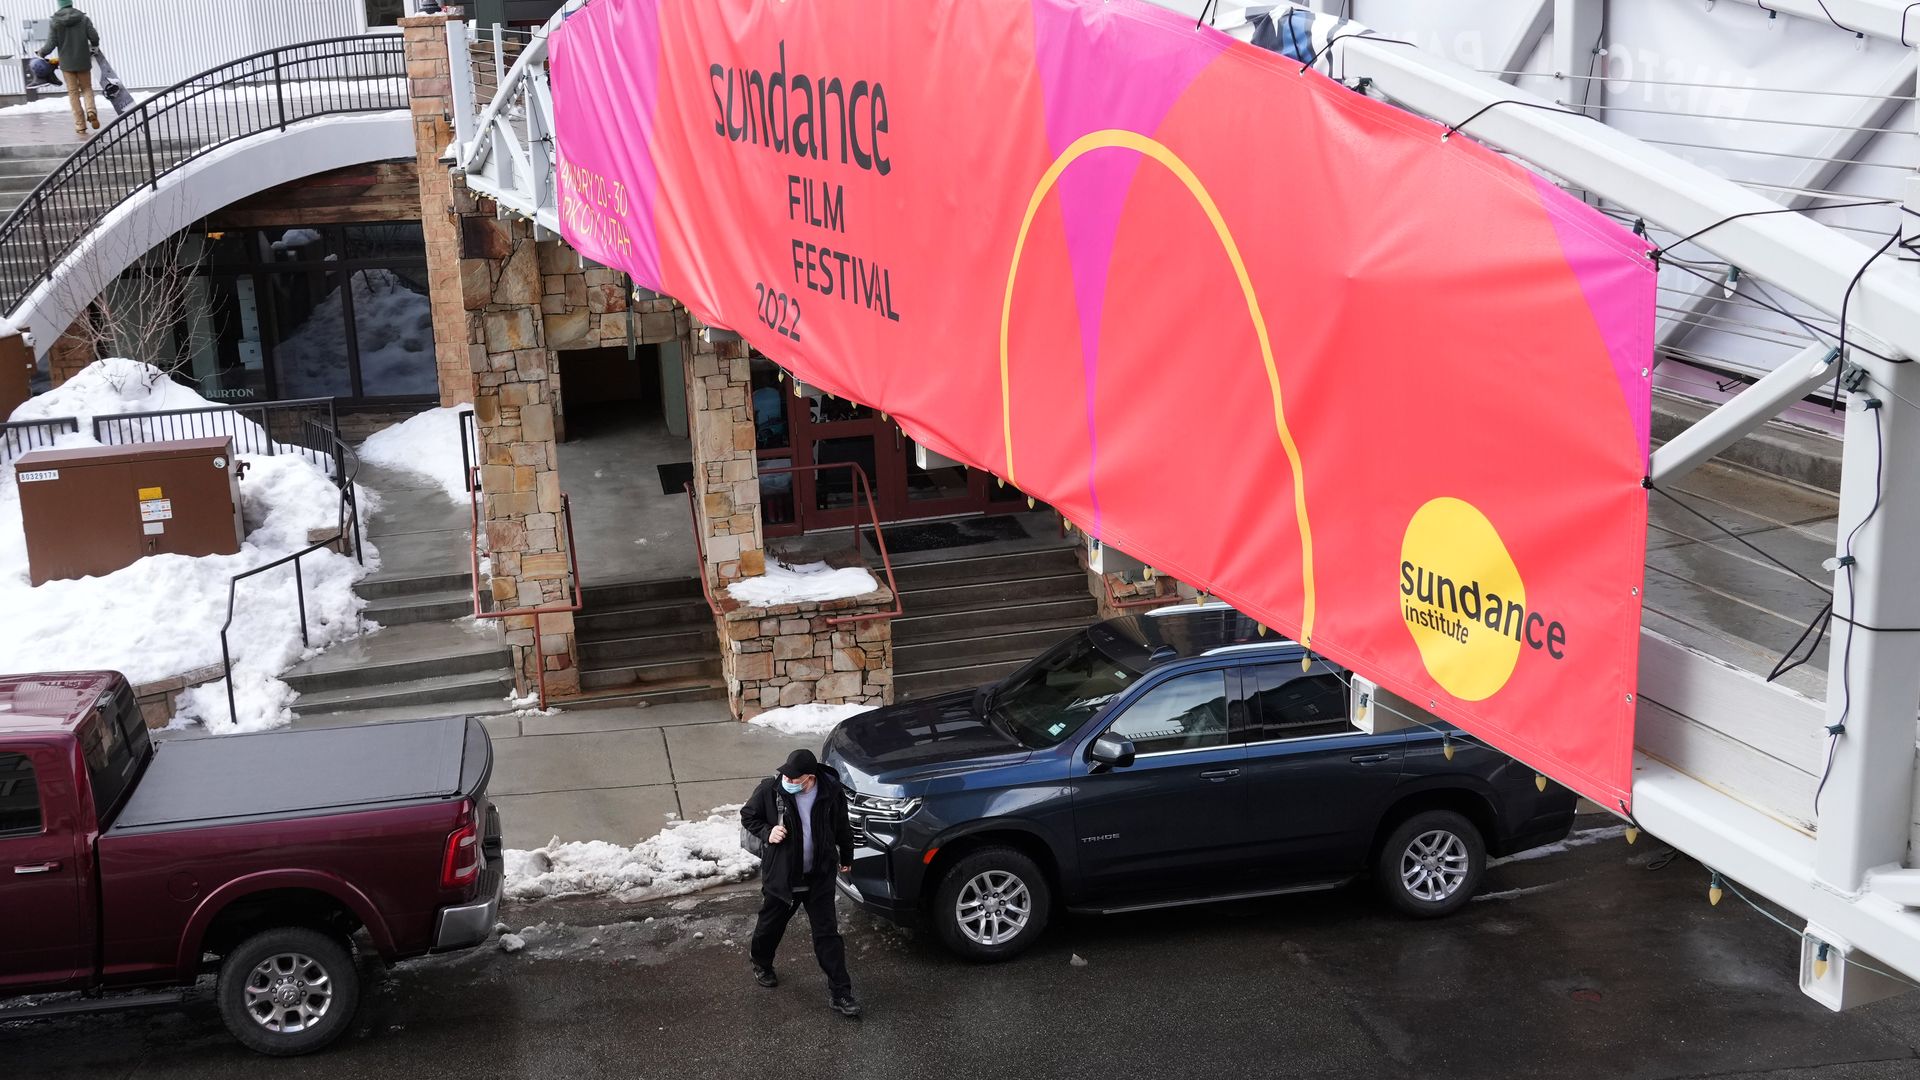 A pink banner reads "Sundance Film Festival" over a city street.